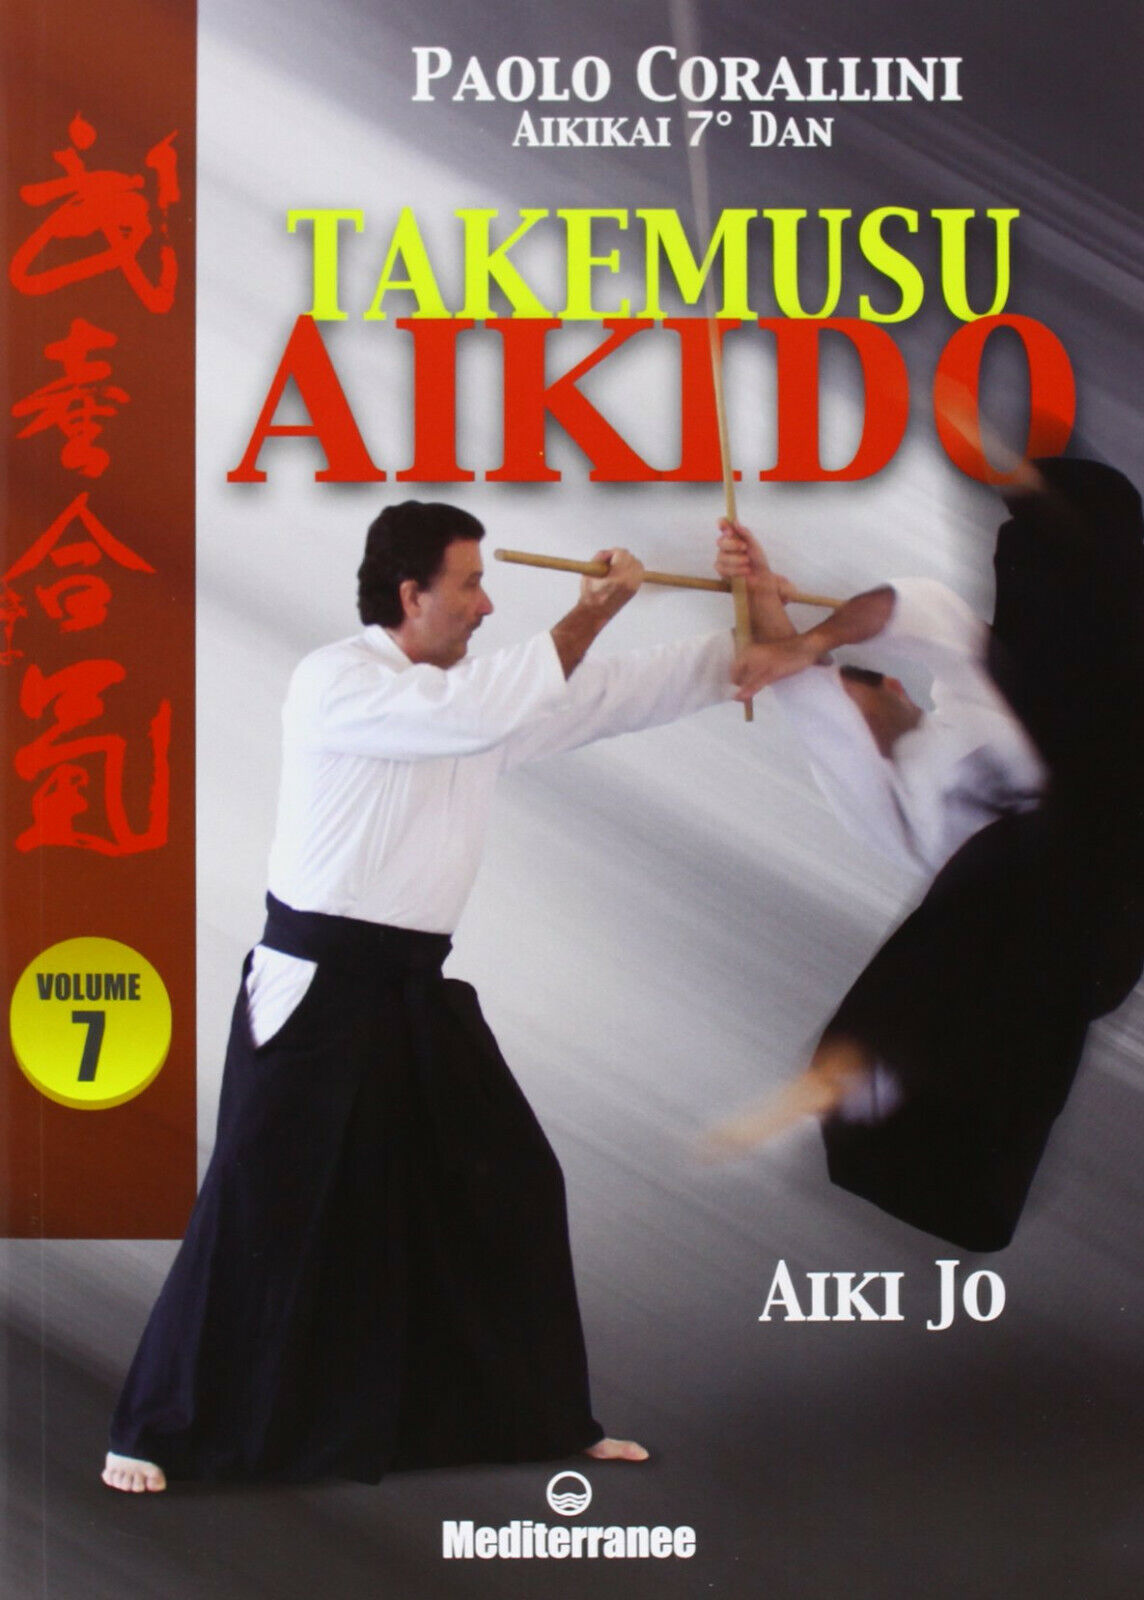 Takemusu aikido.Ediz. illustrata vol.7 - Paolo Corallini - Mediterranee, 2013 libro usato